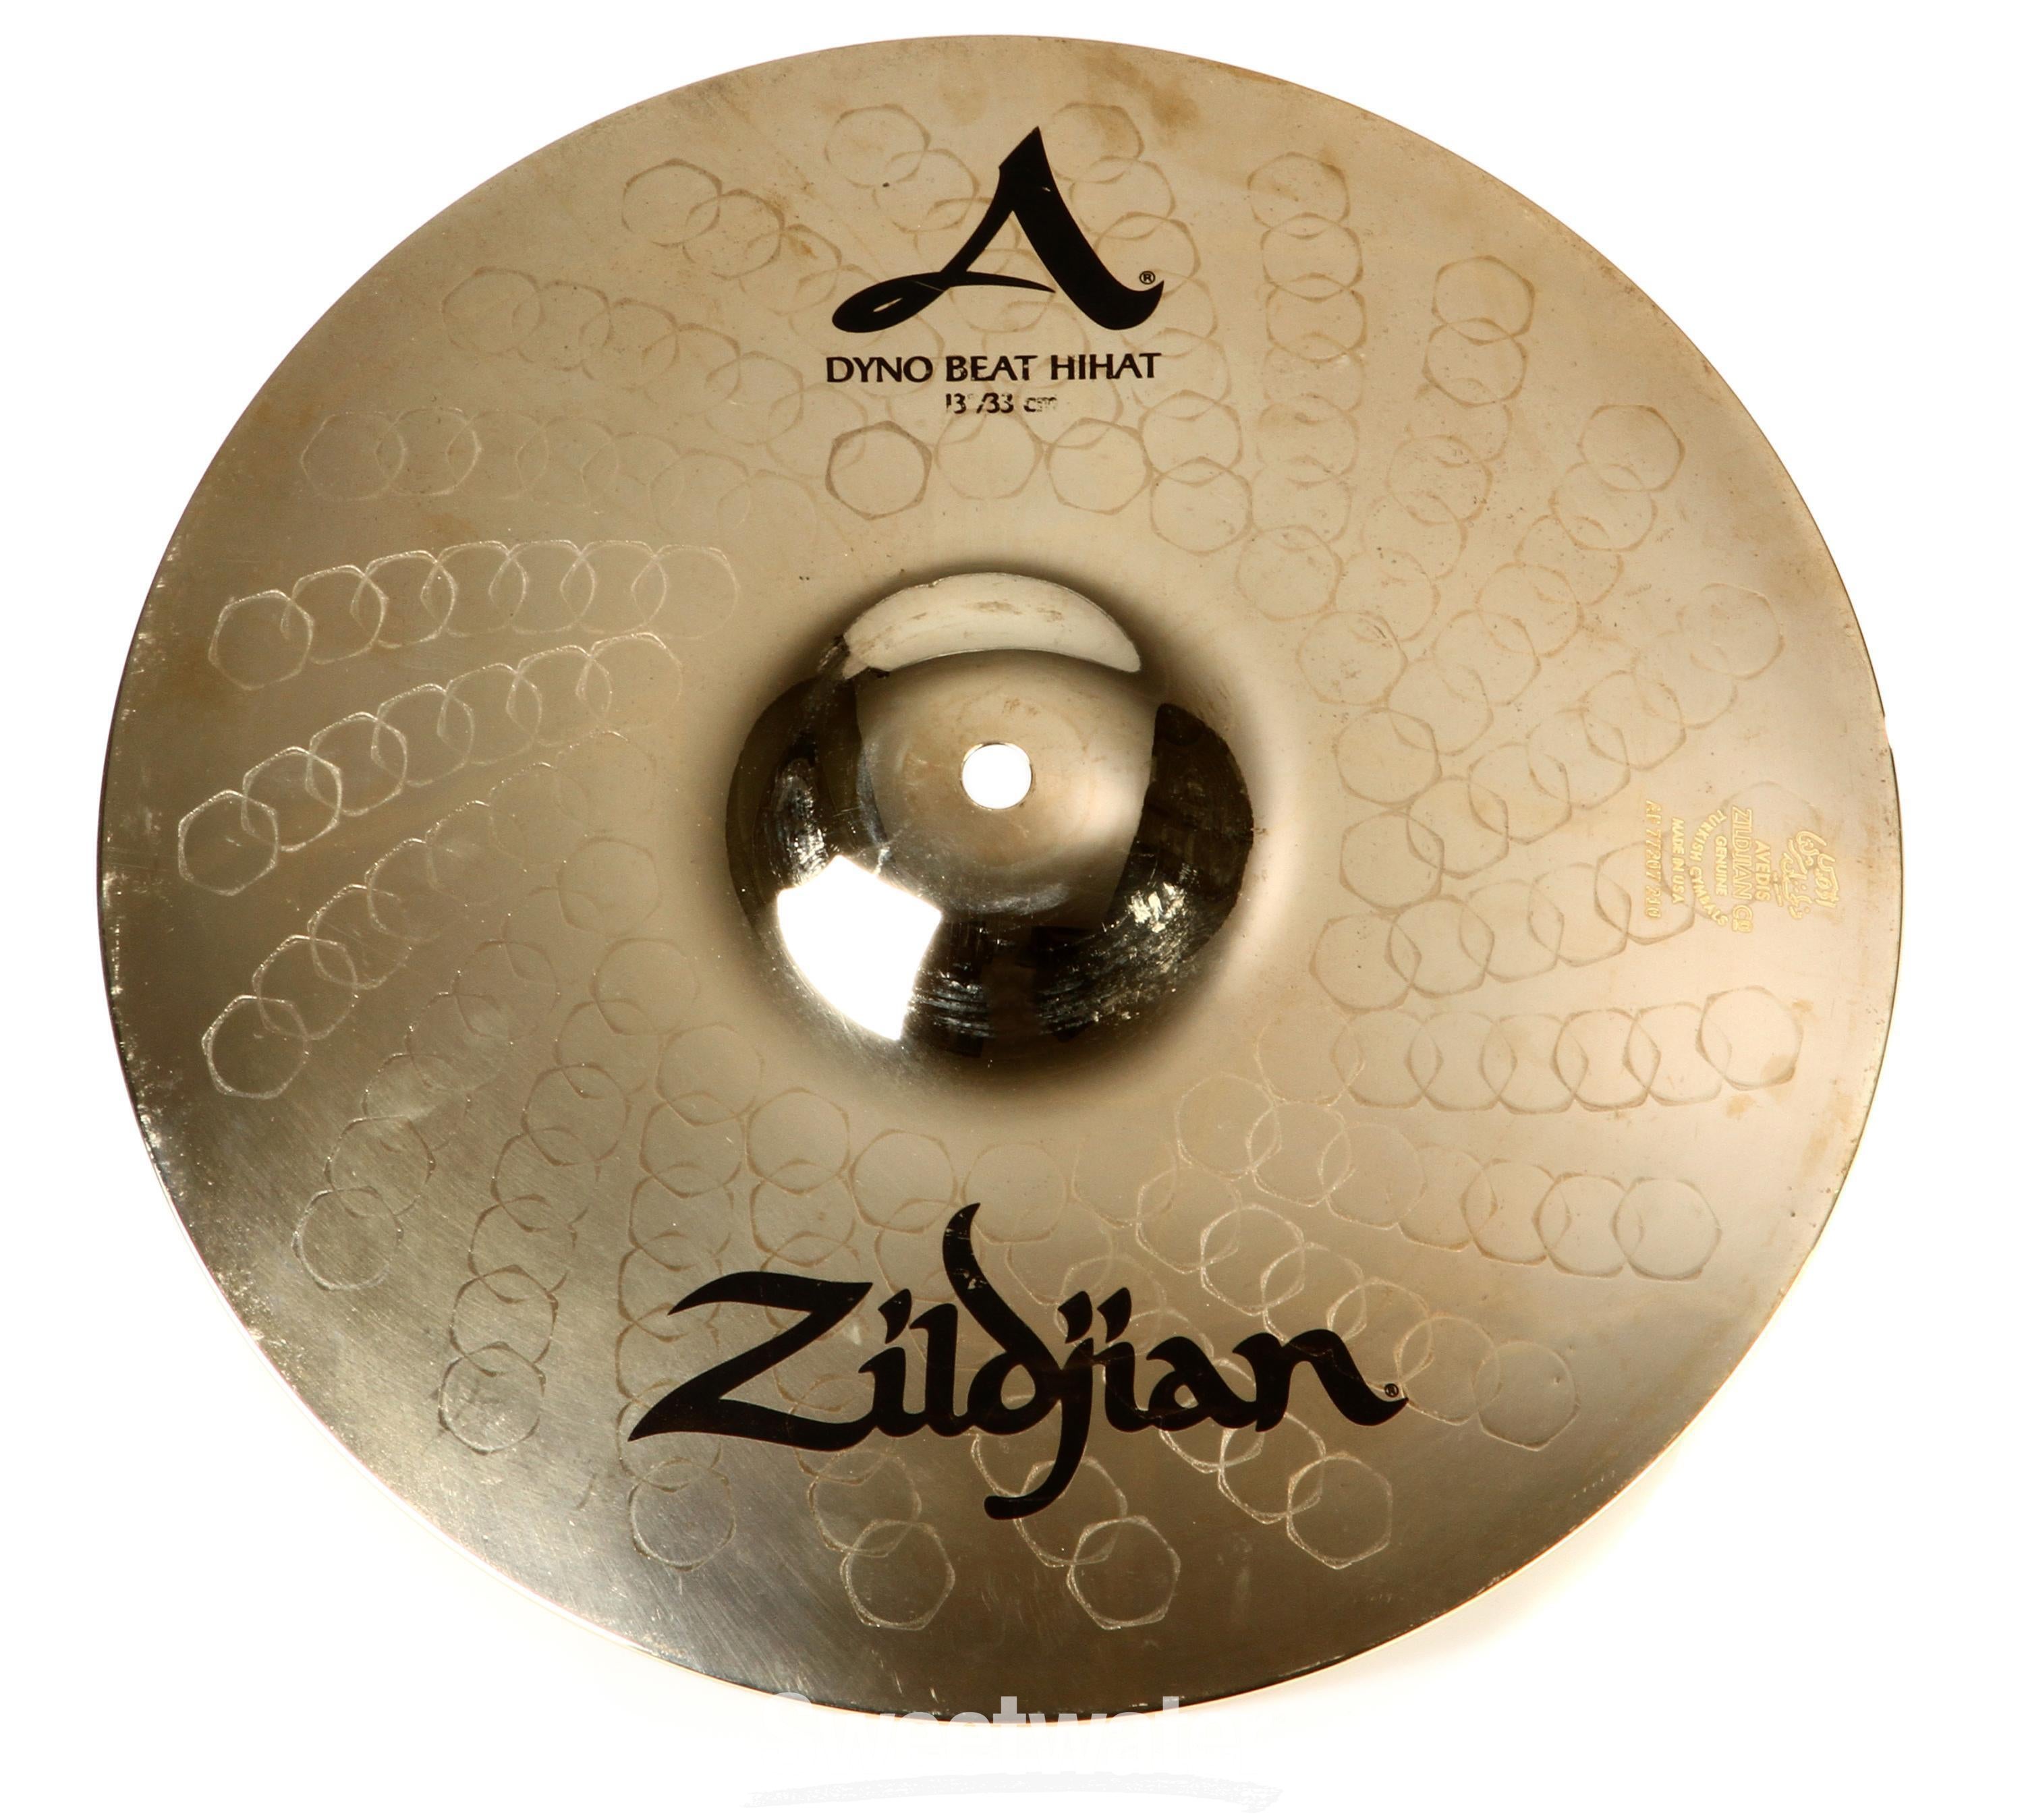 Zildjian 13 inch K/Z Special Hi-hat Cymbals Reviews | Sweetwater